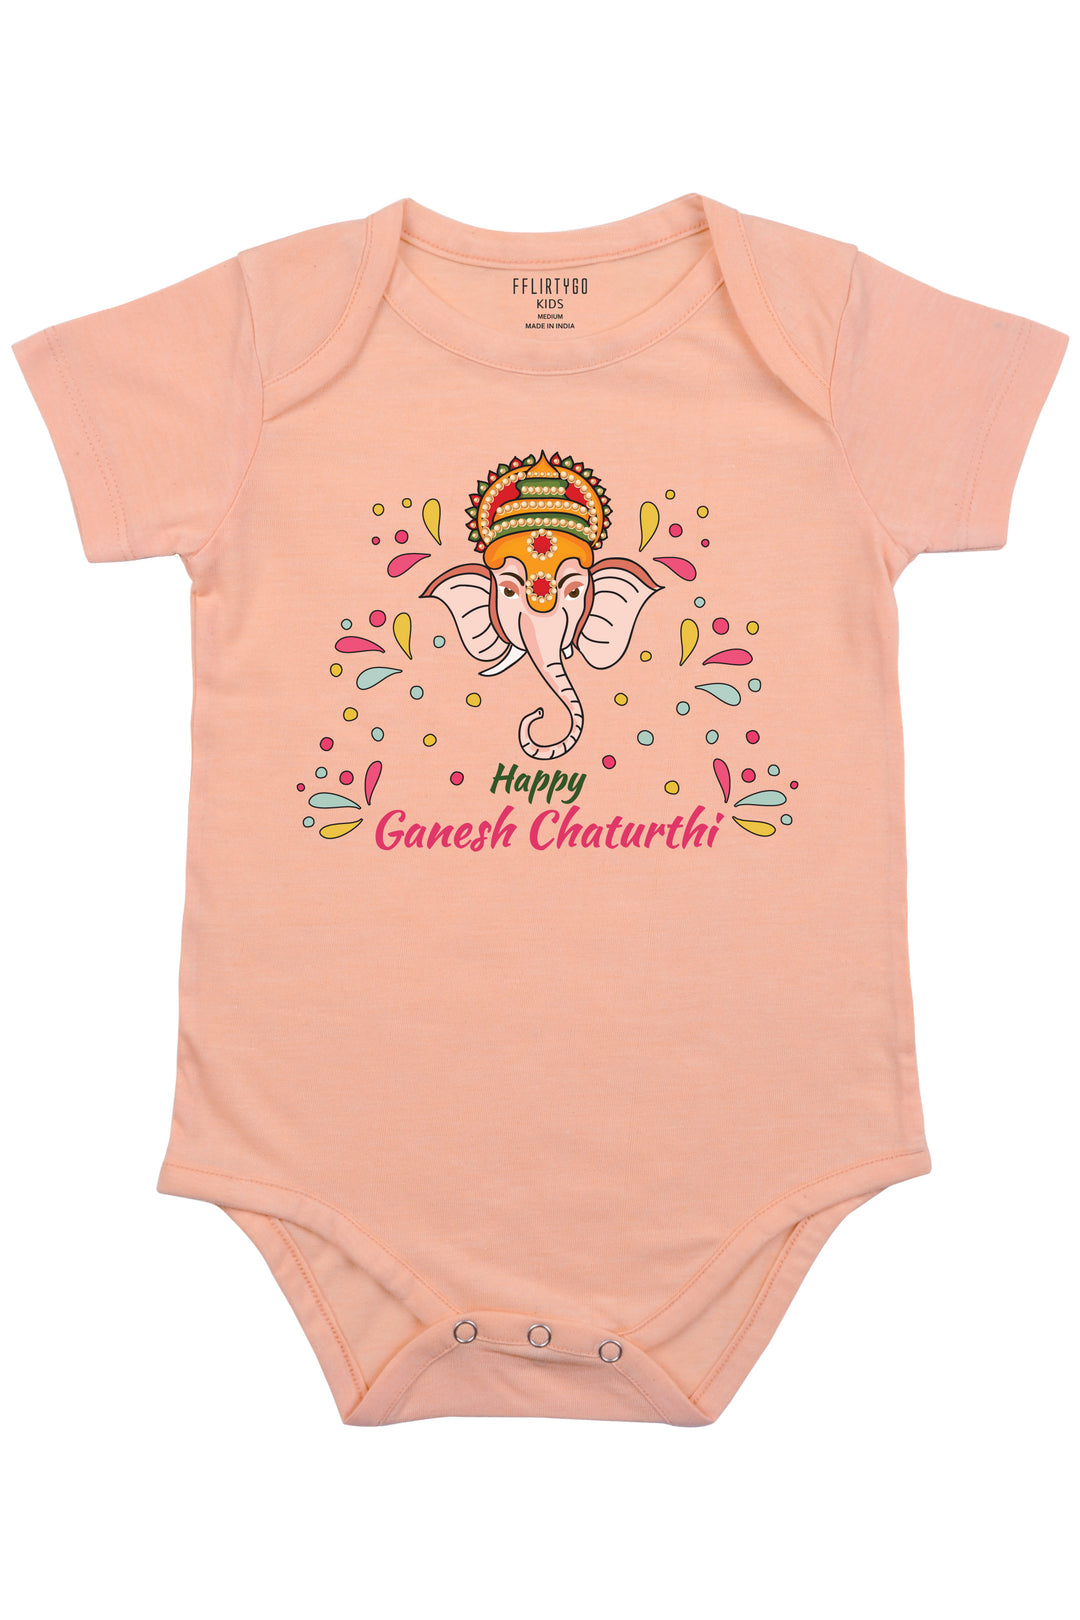 Happy Ganesh Chaturth Baby Romper | Onesies